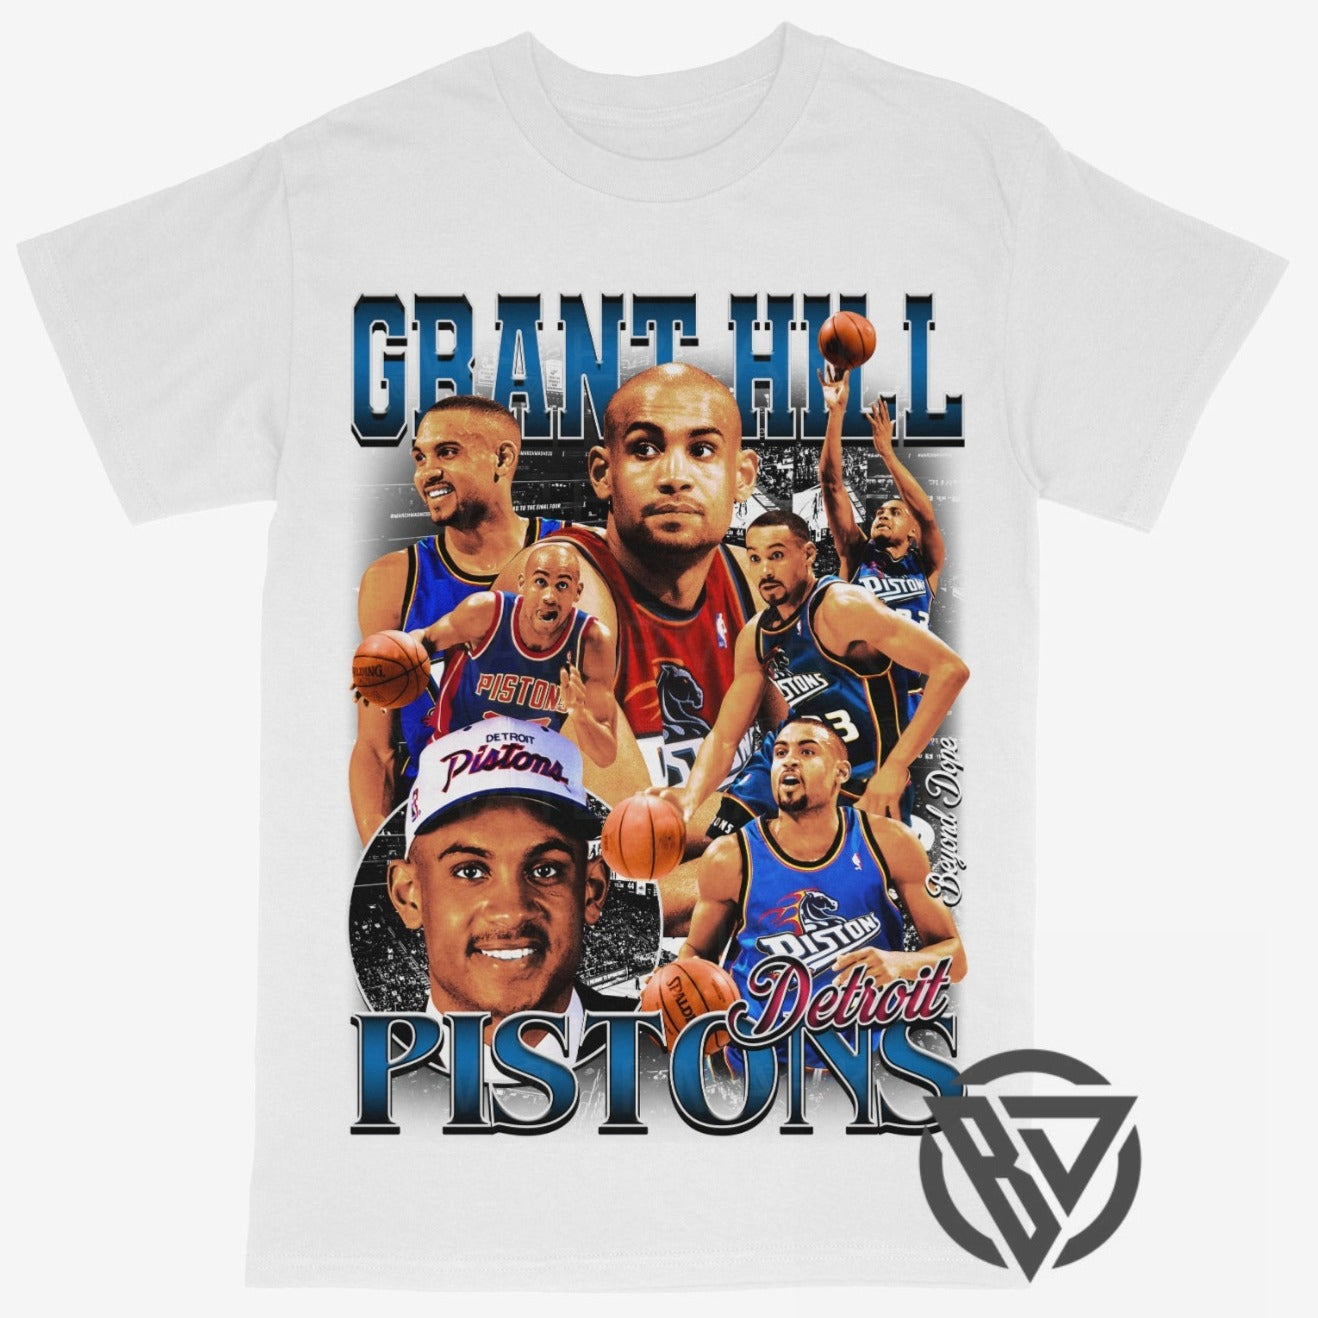 Grant Hill Tee Shirt Detroit Pistons NBA Basketball